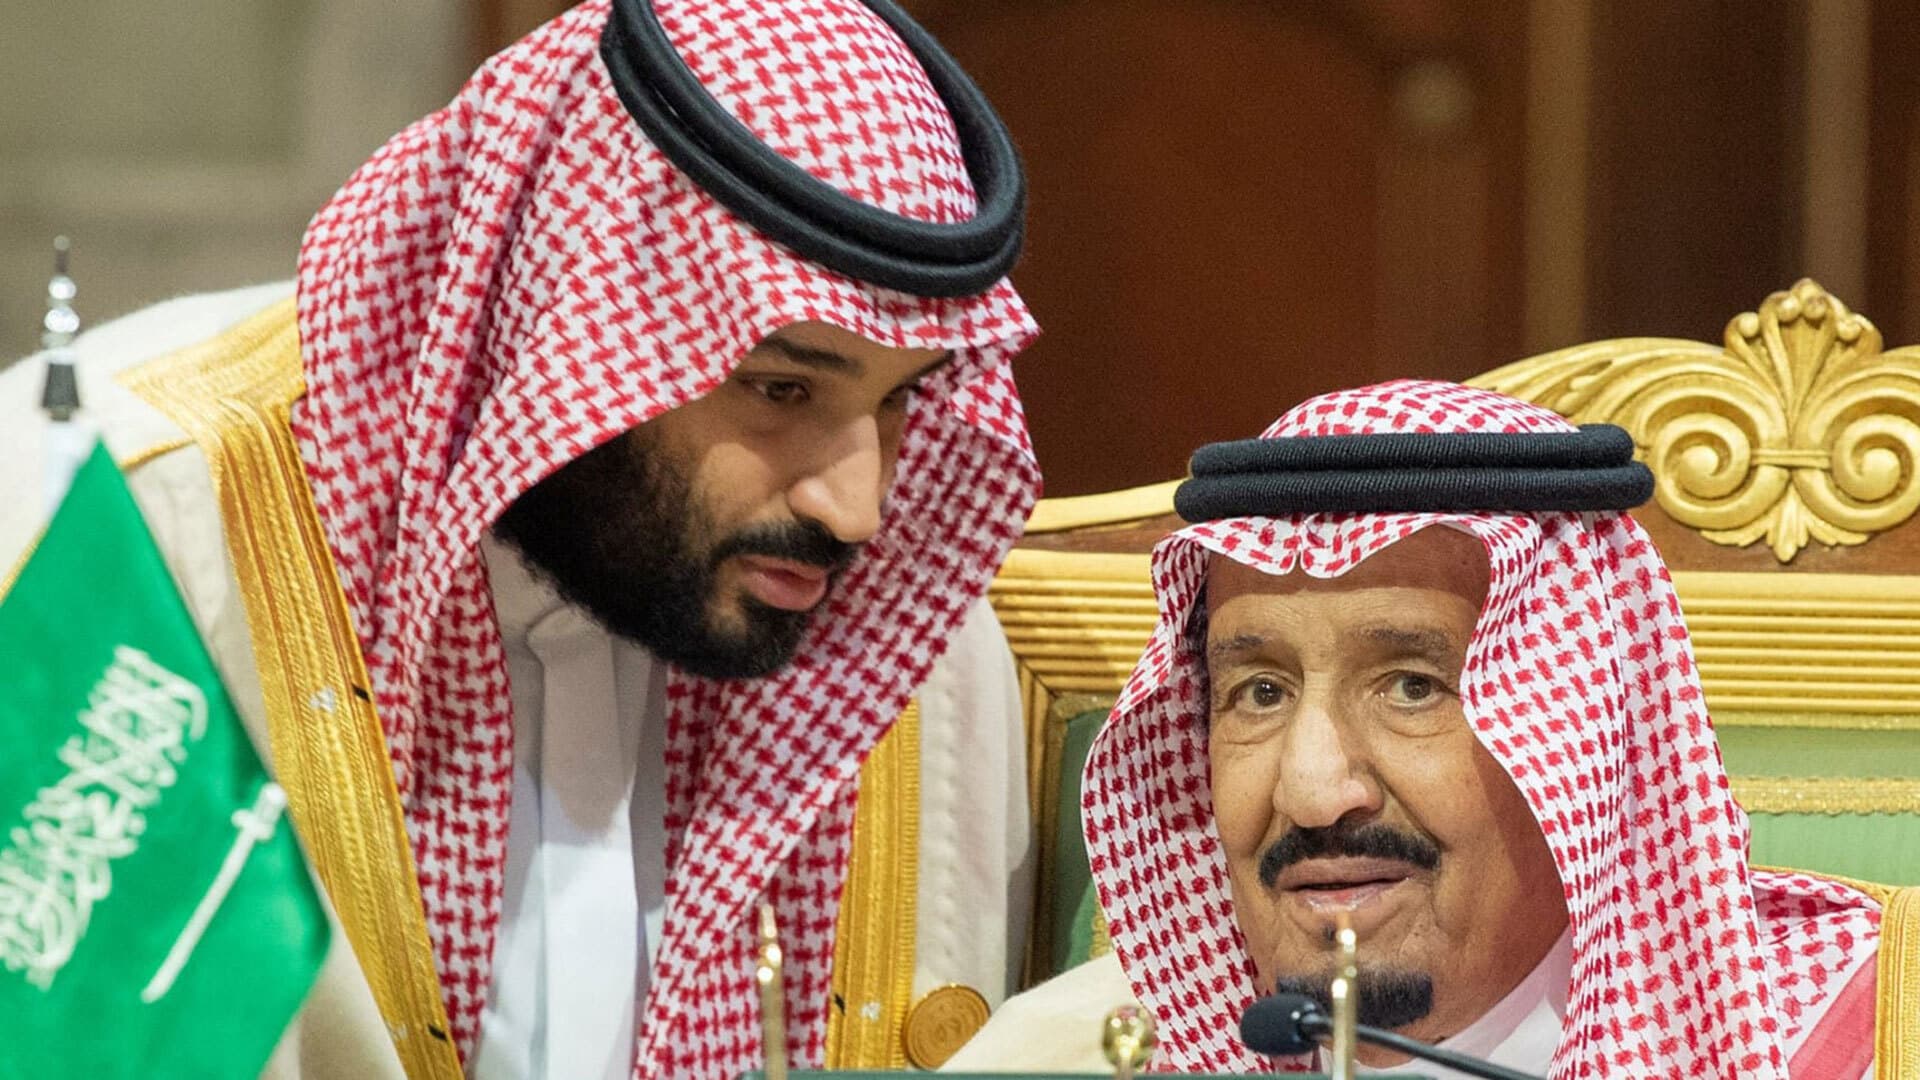 Saudi Arabia's Crown Prince Mohammed bin Salman and Saudi Arabia's King Salman bin Abdulaziz Al Saud